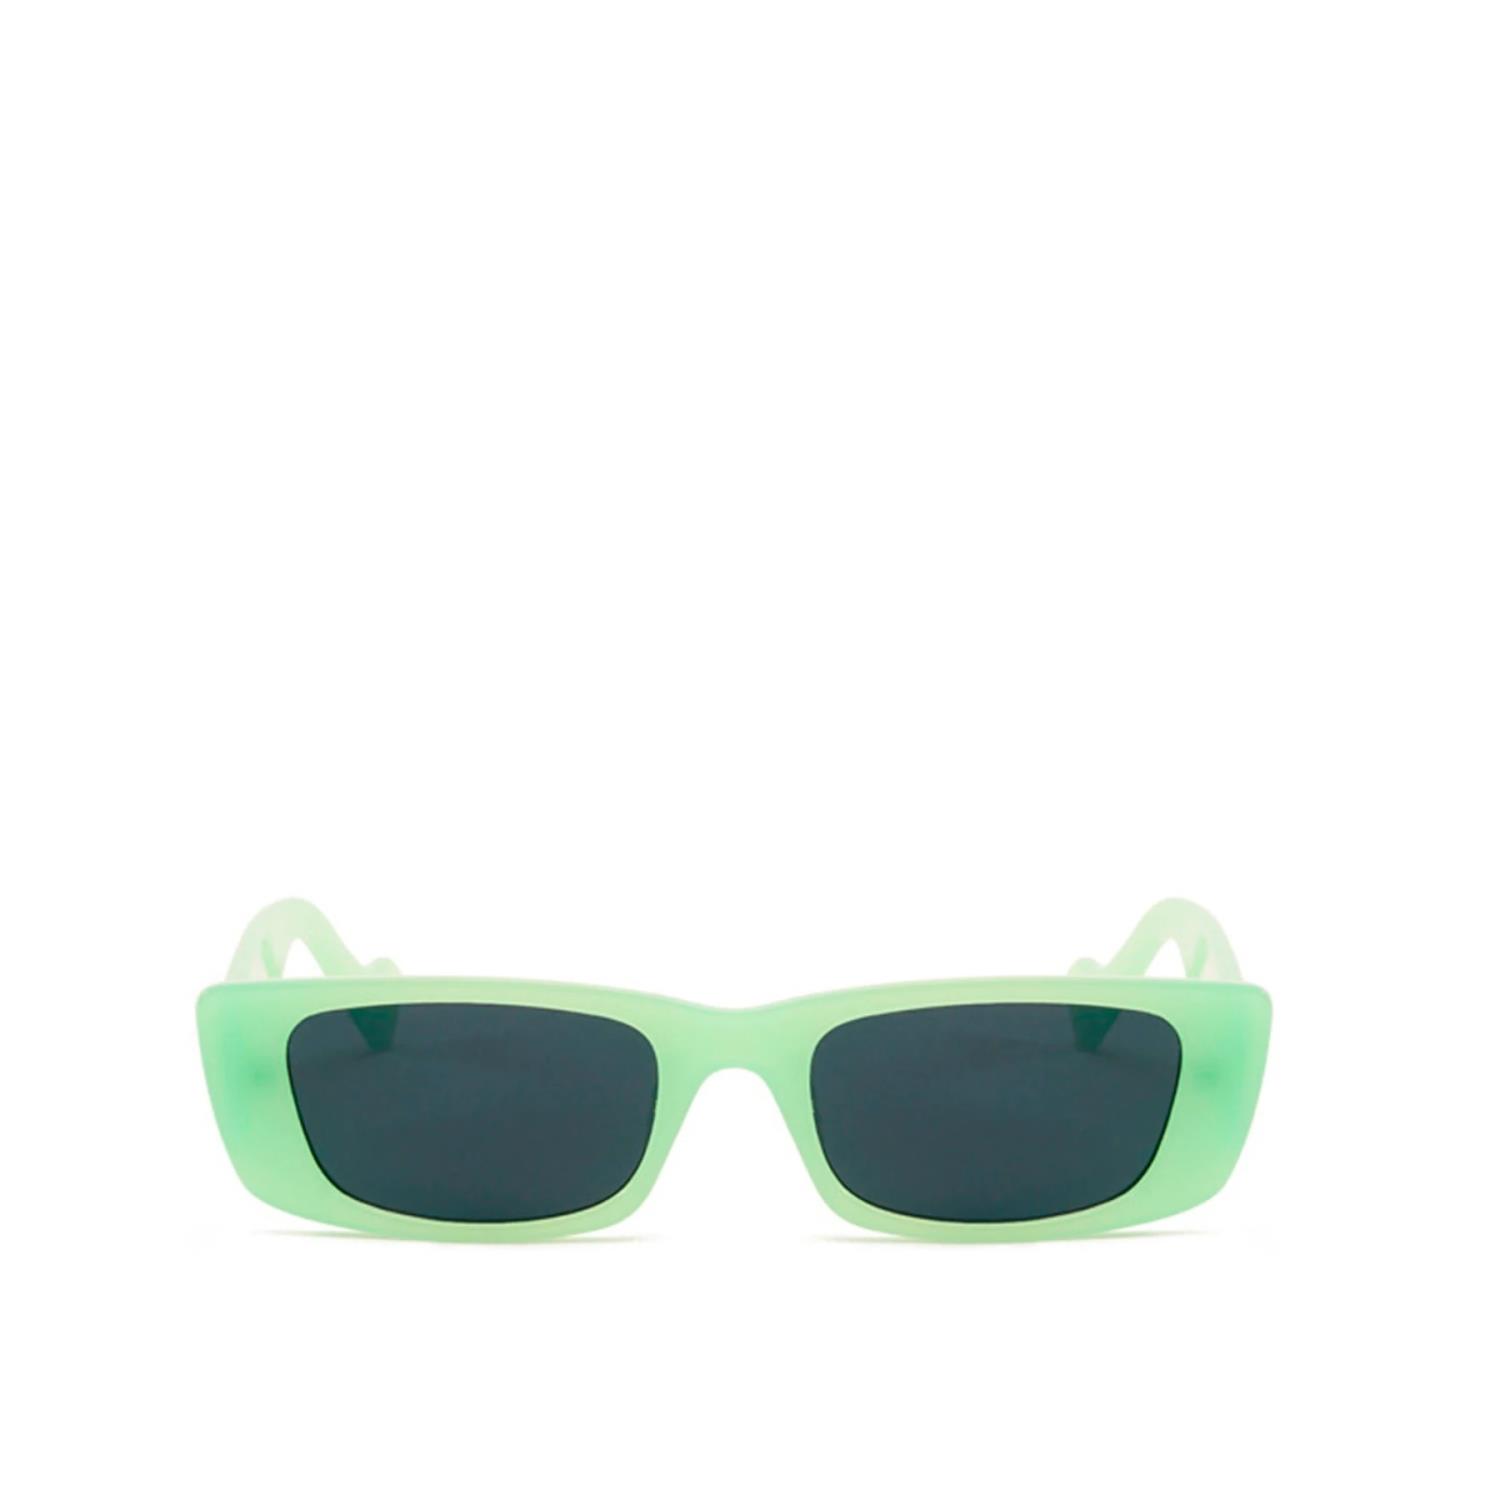 Sistie Sunglasses, grønn